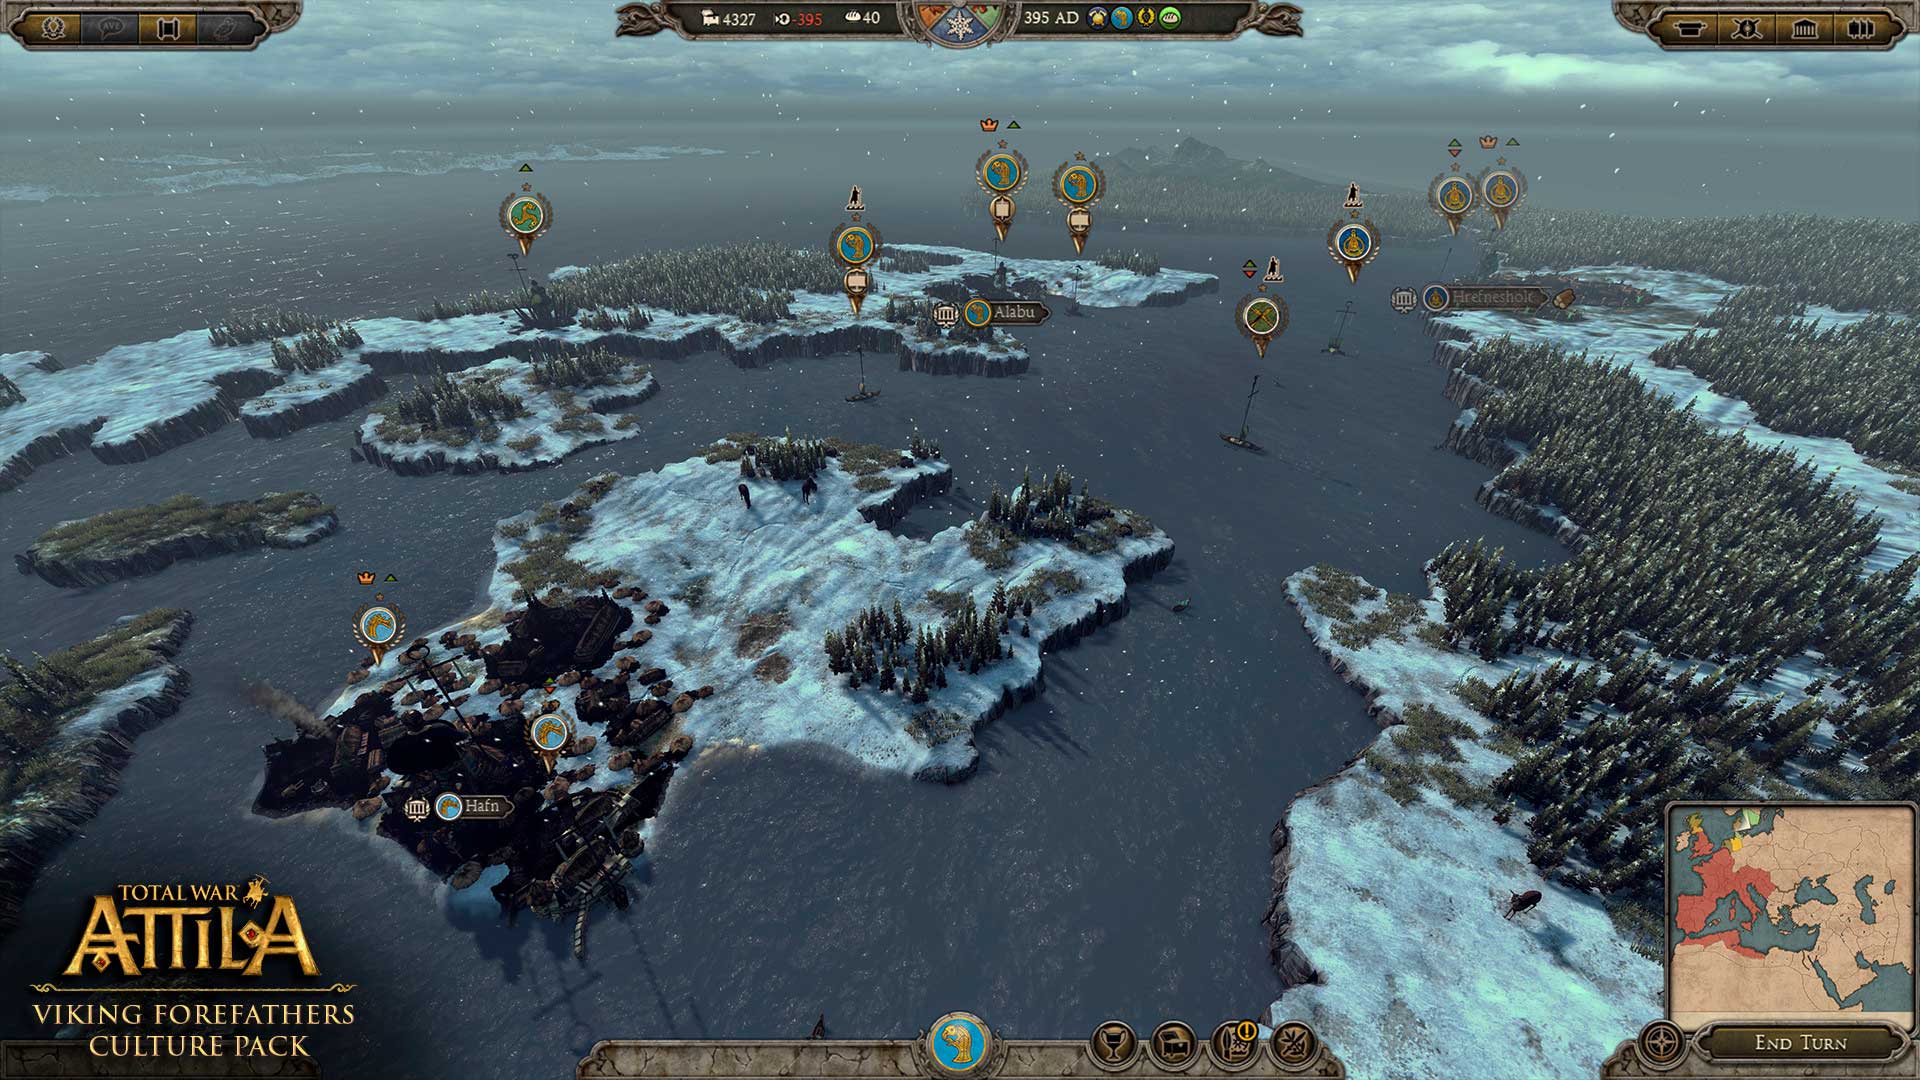 Total War Attila - Viking Forefathers Culture Pack DLC